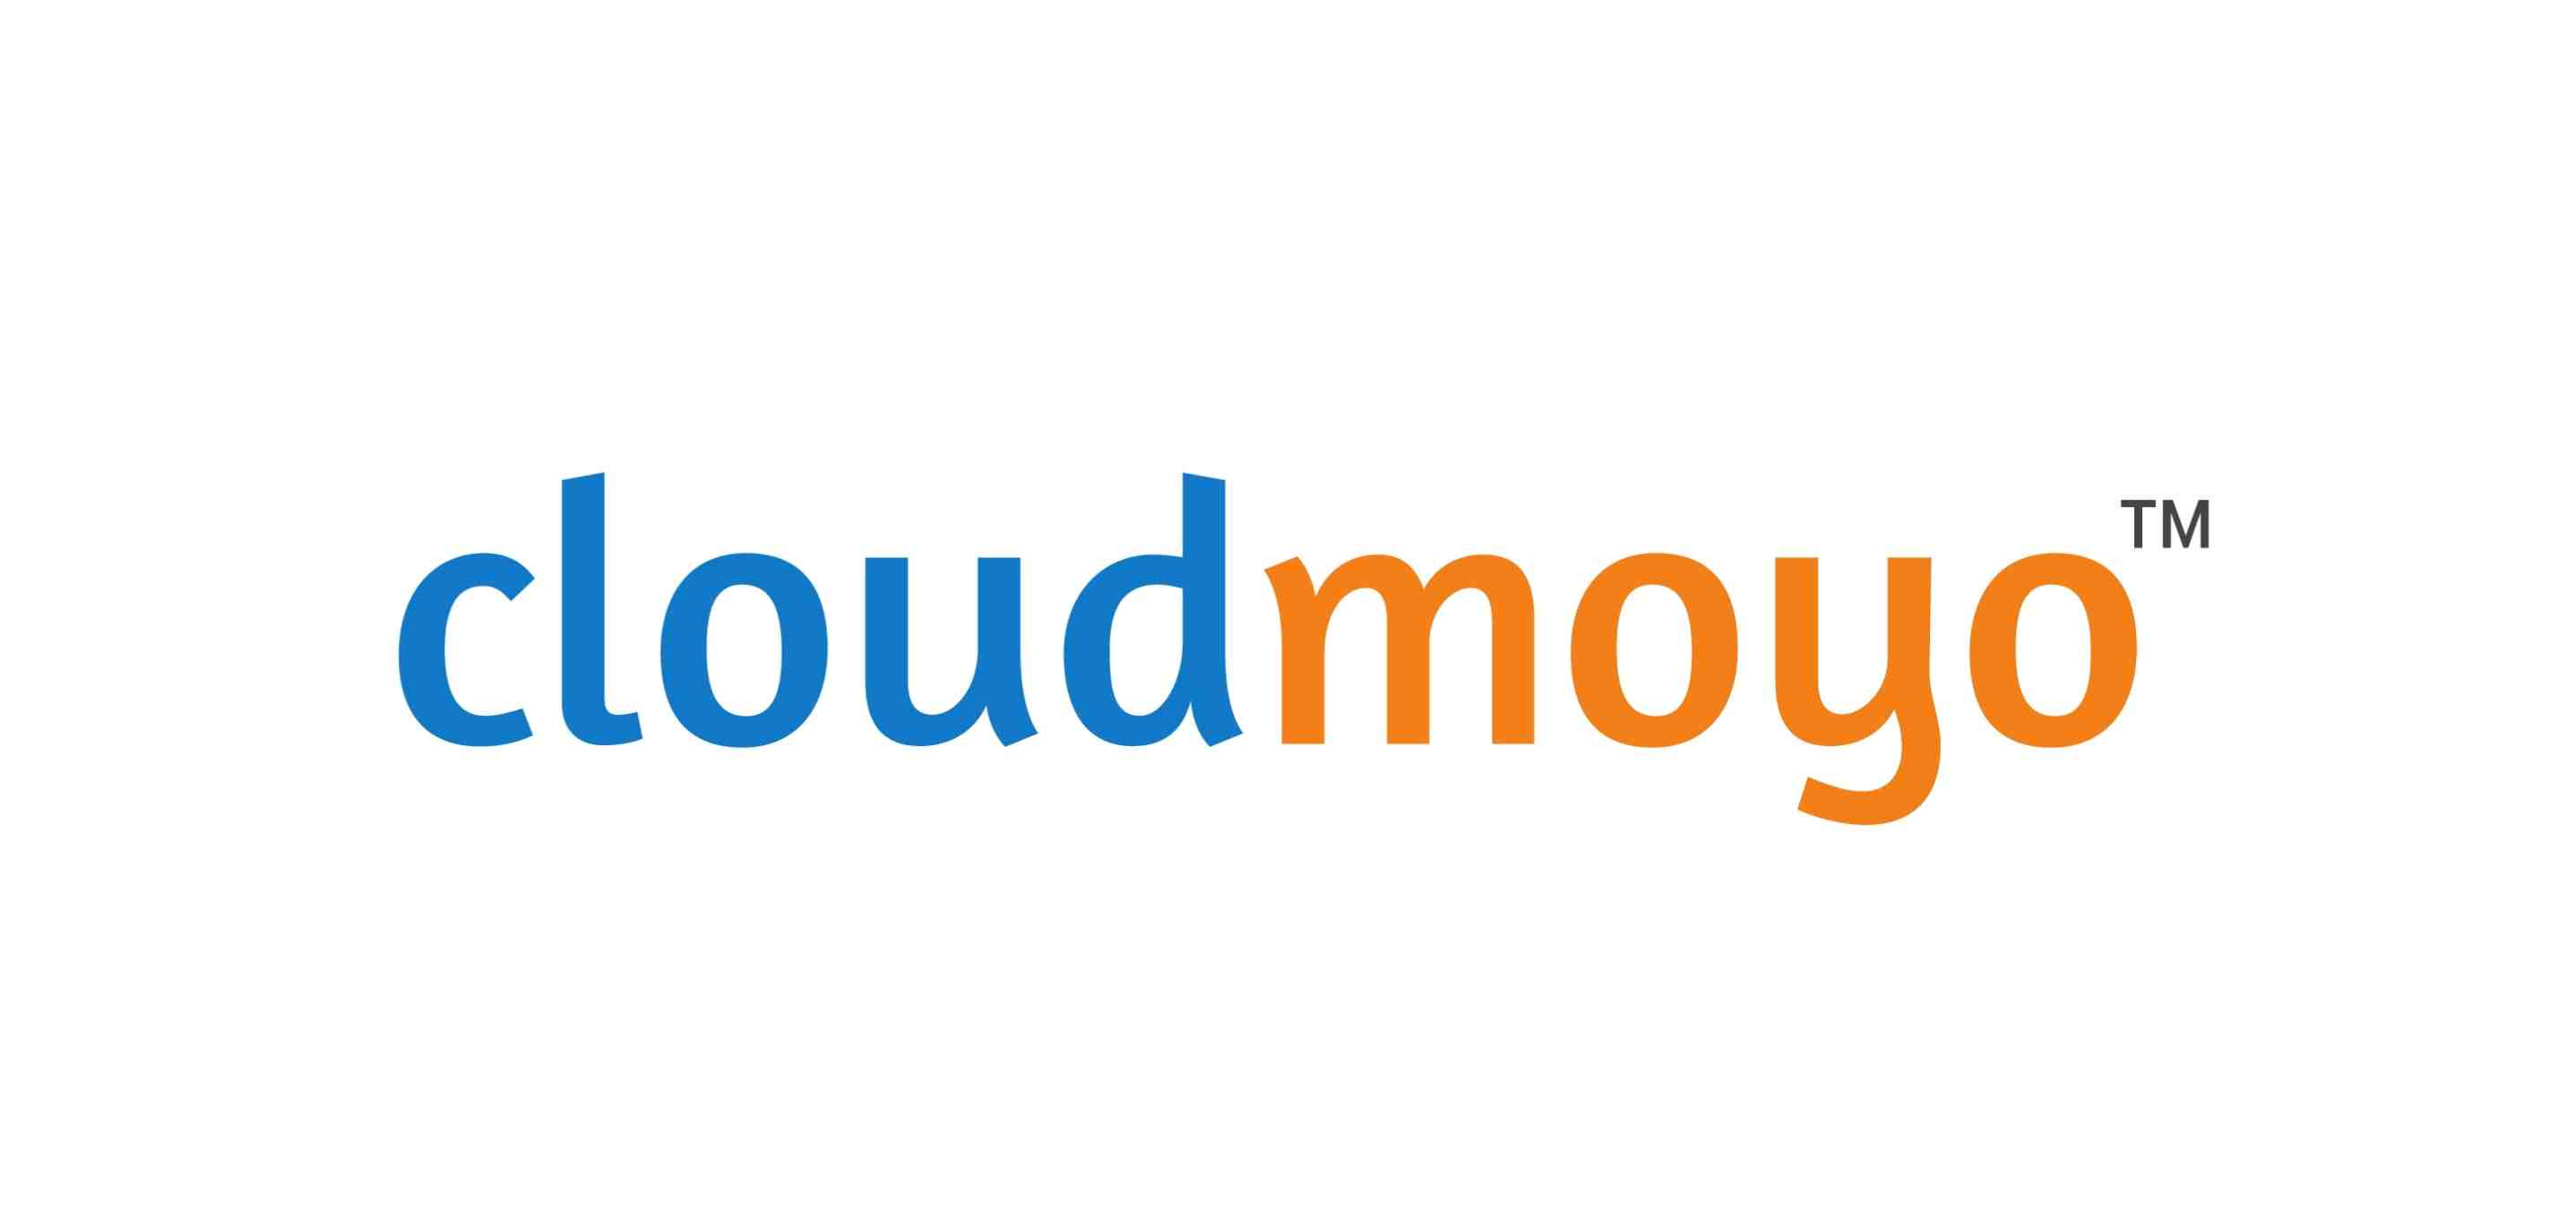 Blogs - CloudMoyo